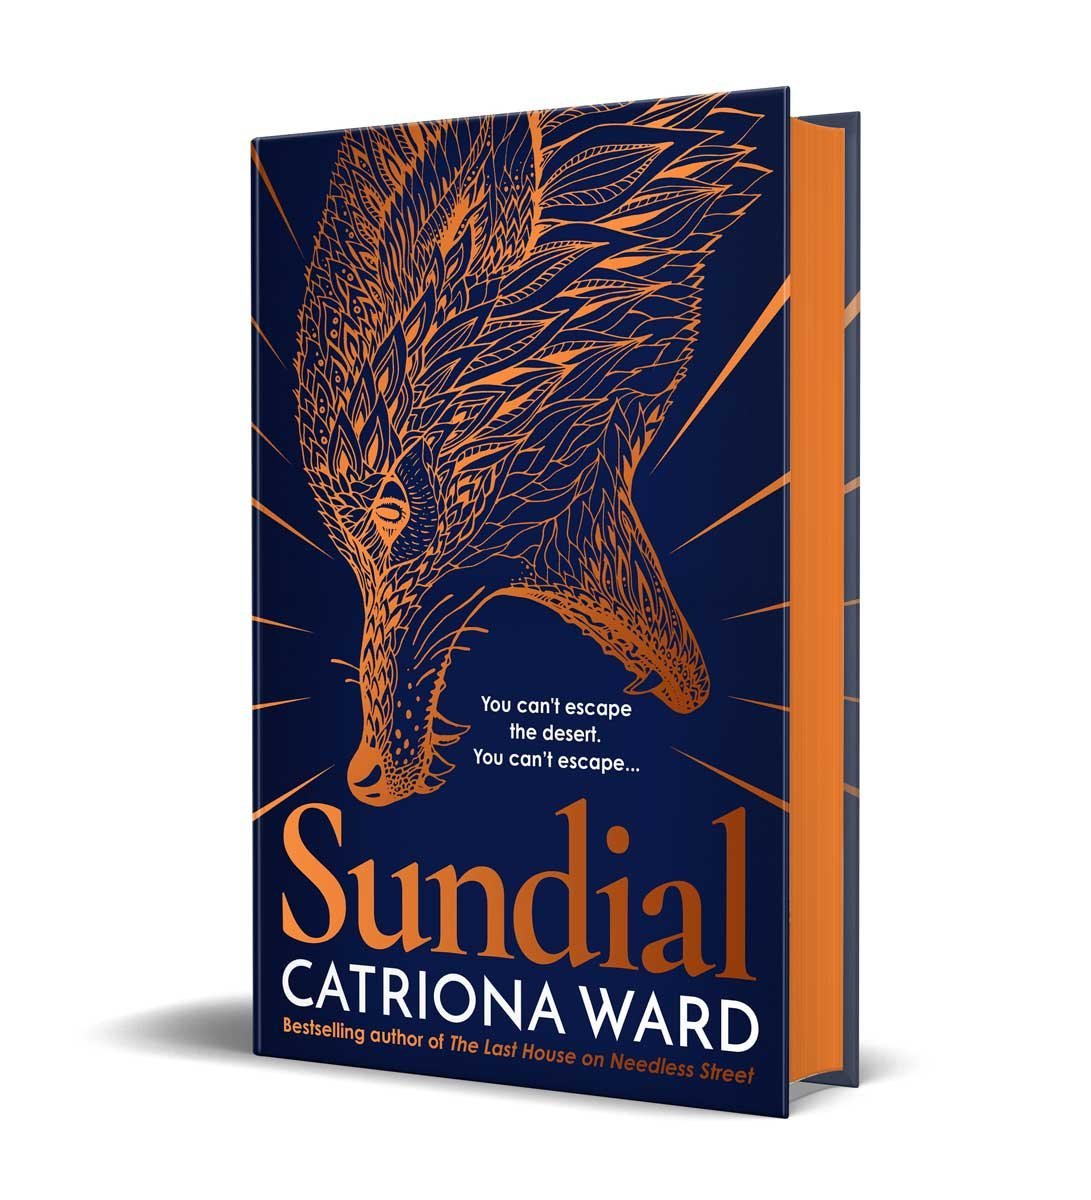 sundial by catriona ward